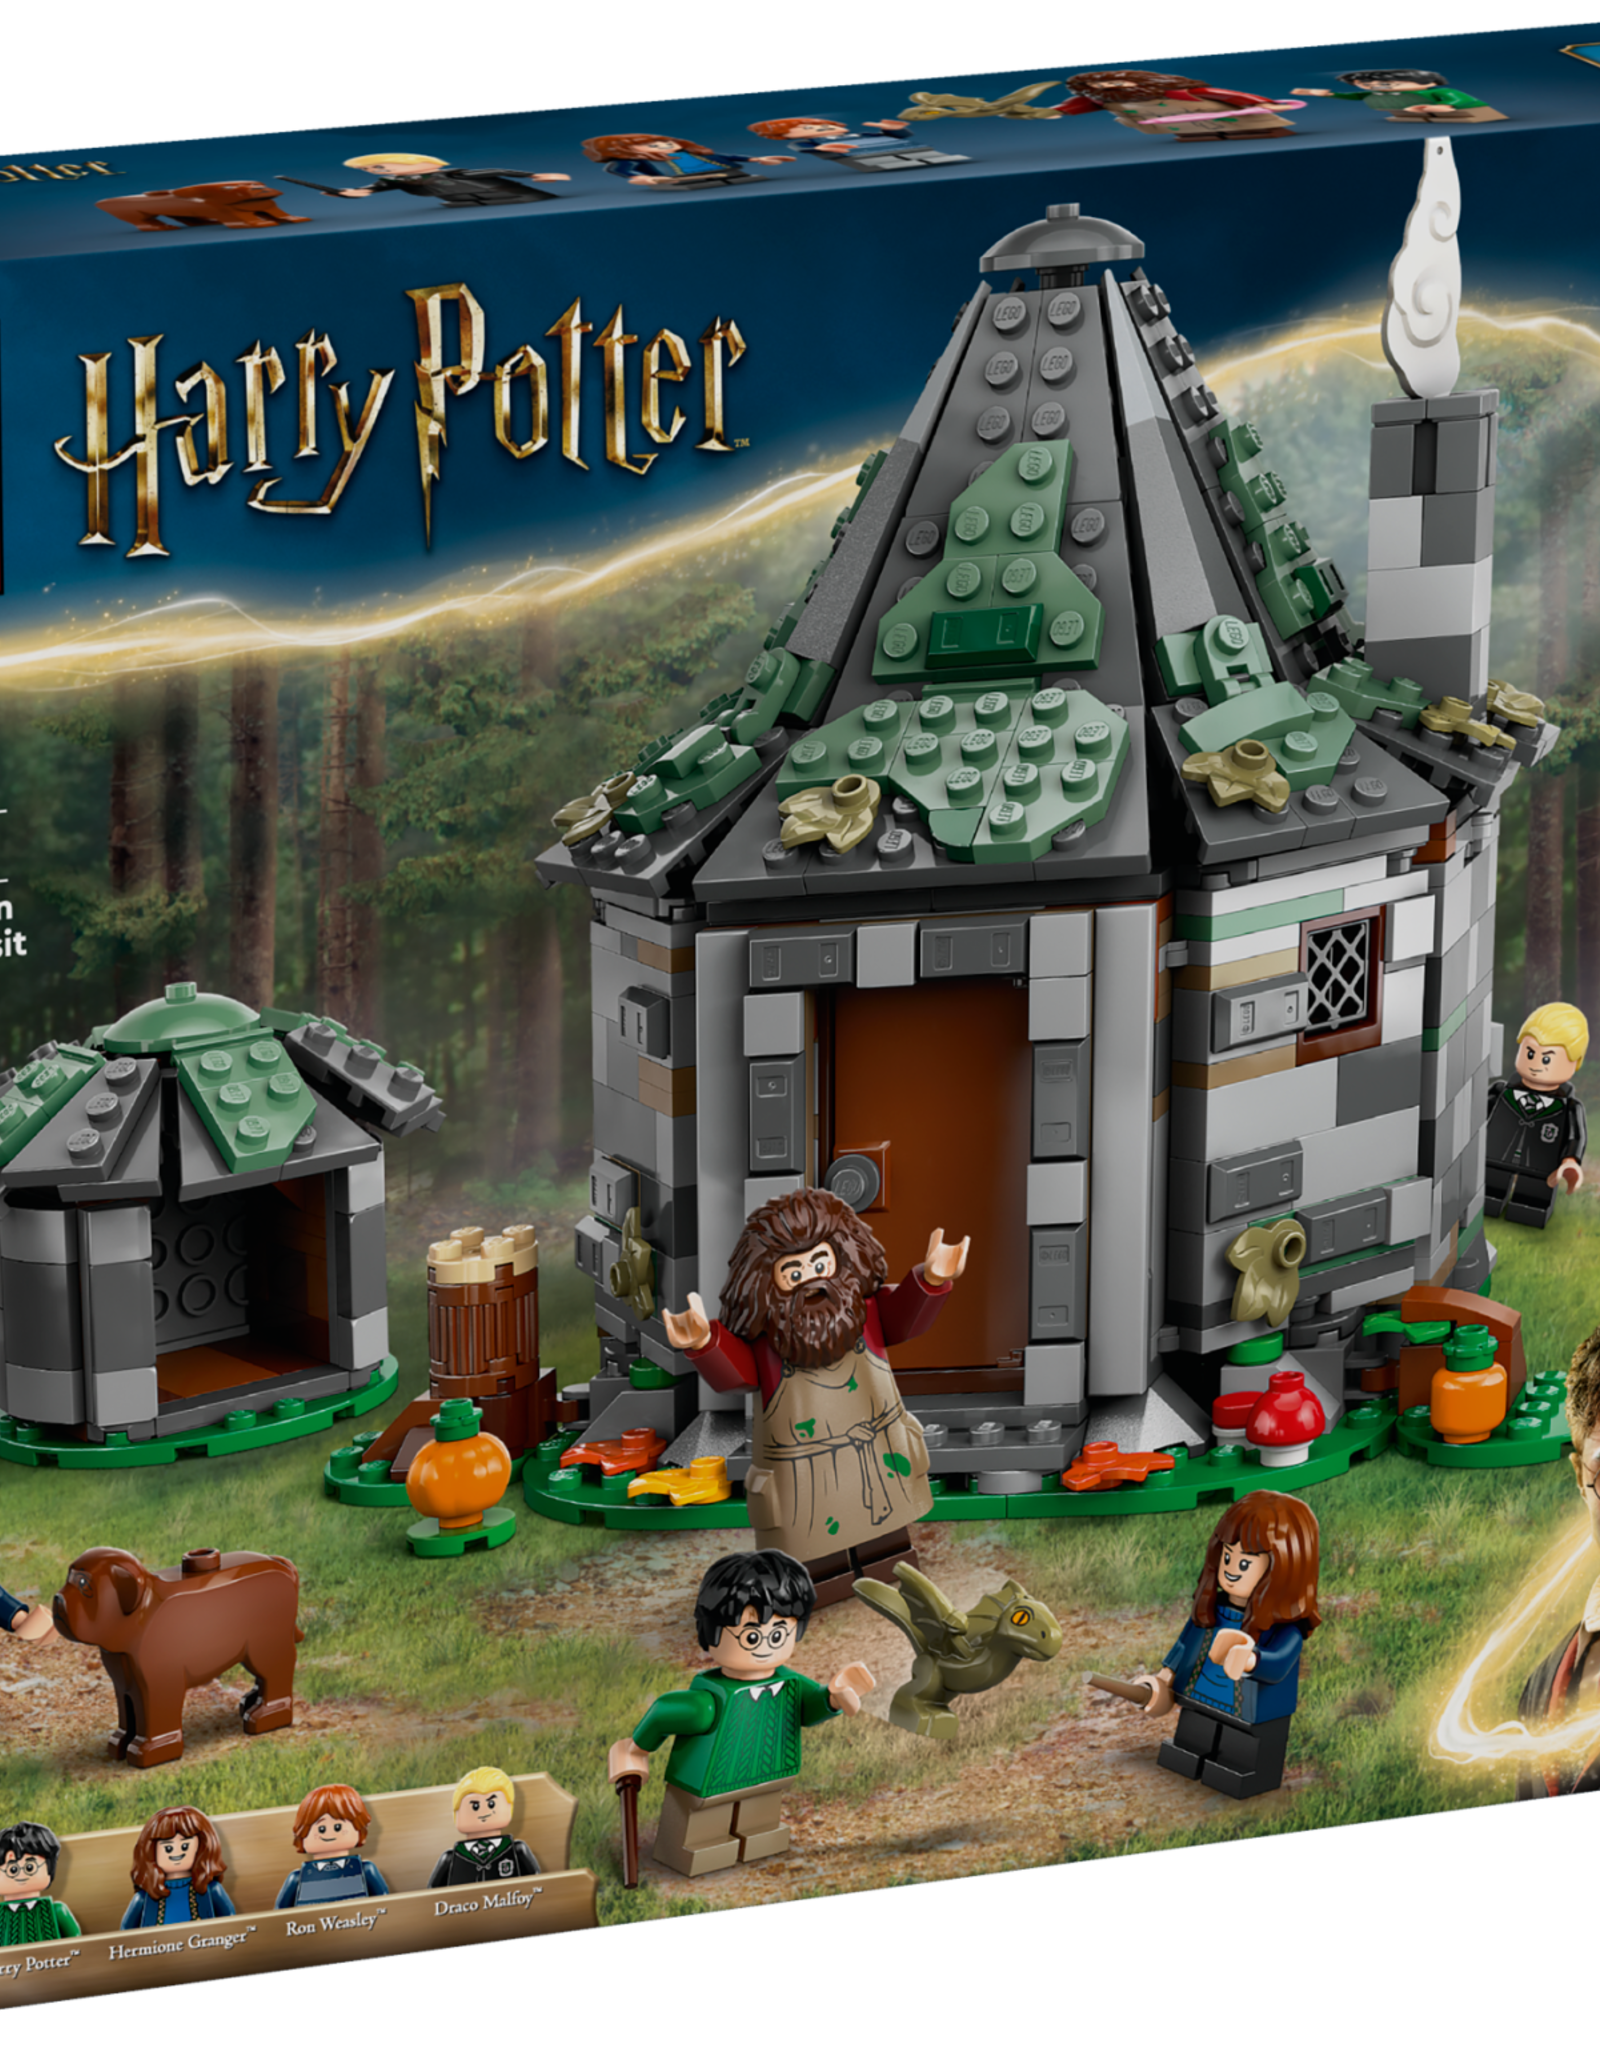 Lego Hagrid's Hut: An Unexpected Visit